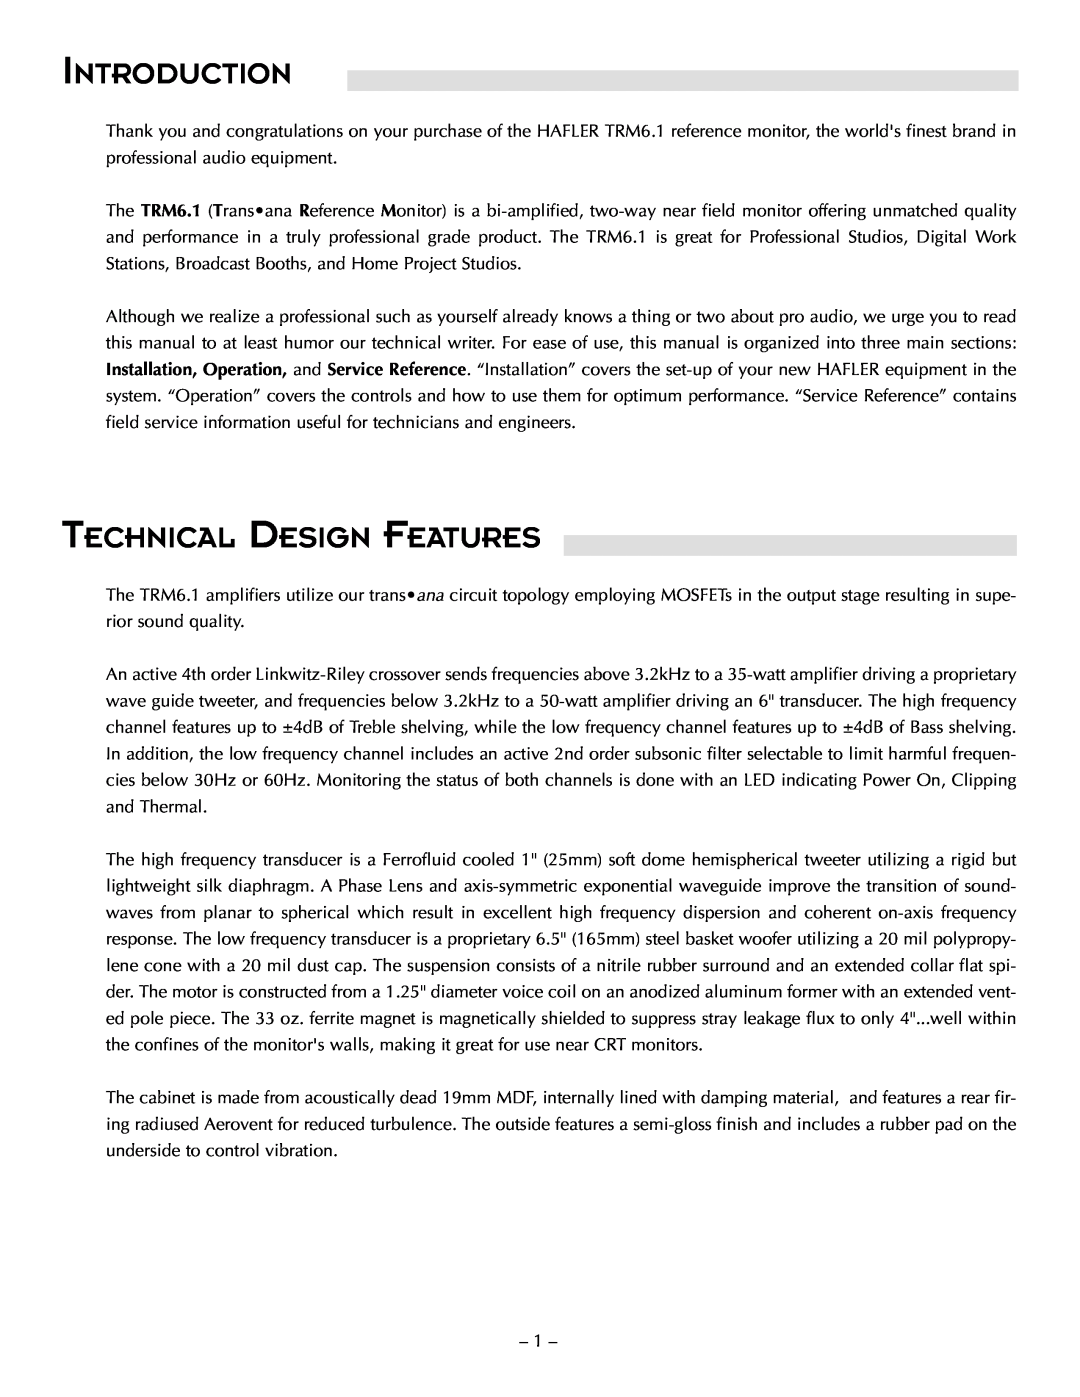 Hafler TRM6.1CE manual Introduction, Technical Design Features 